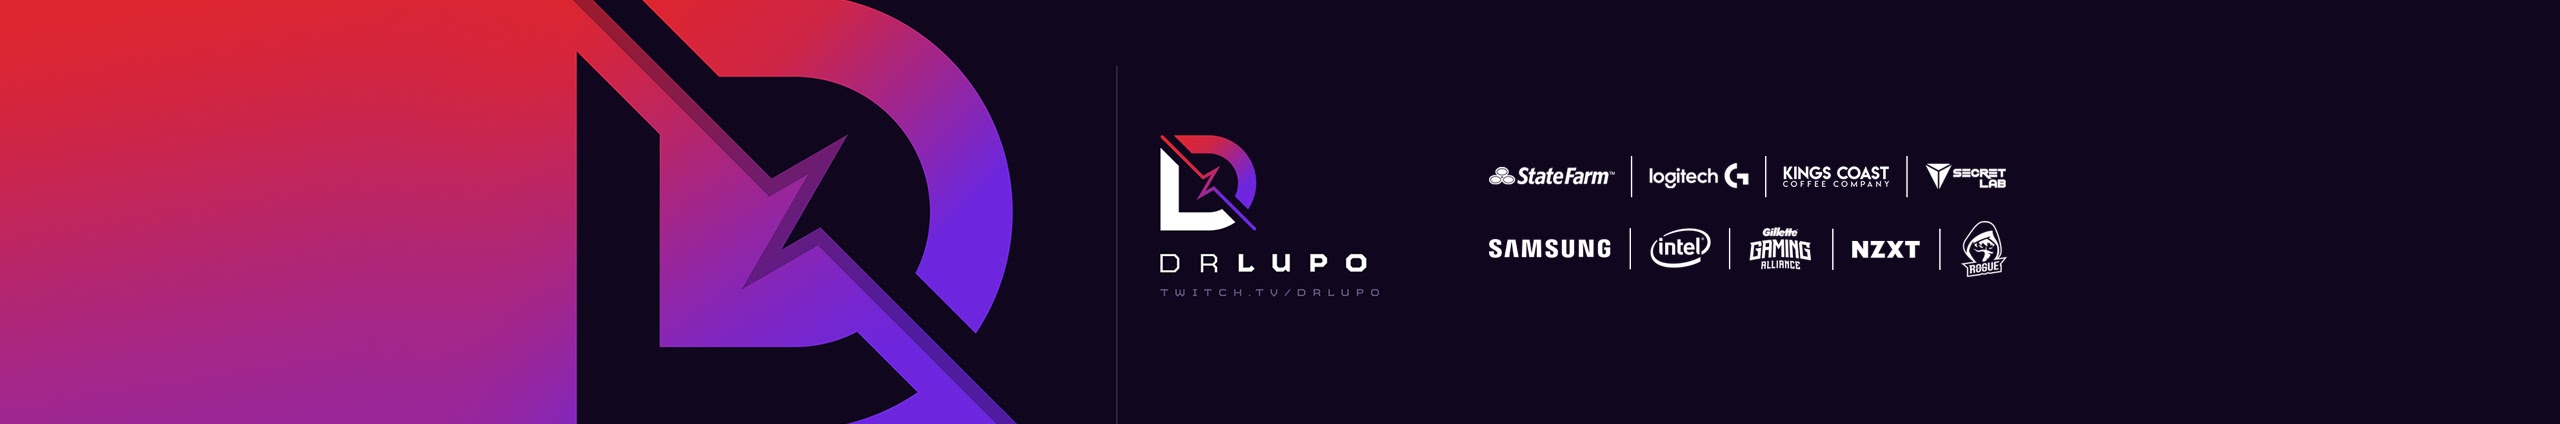 DrLupo_banner